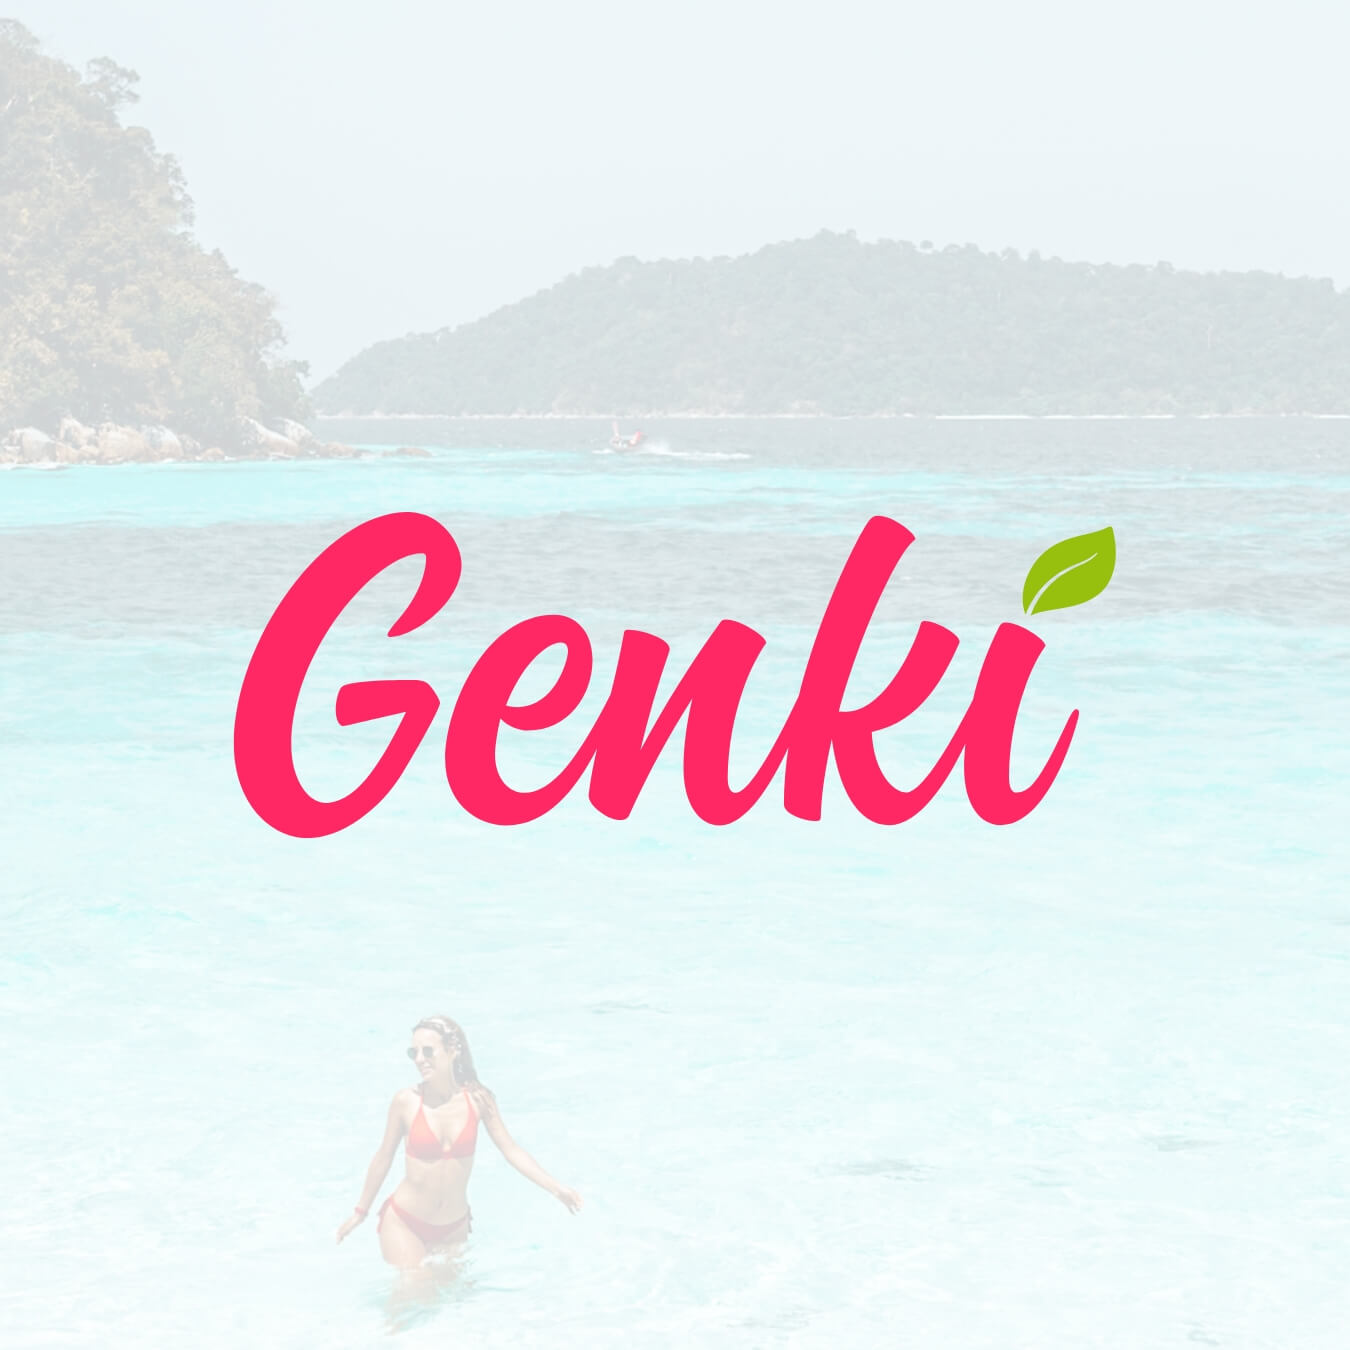 Genki travel insurance for digital nomads with digital nomads daily